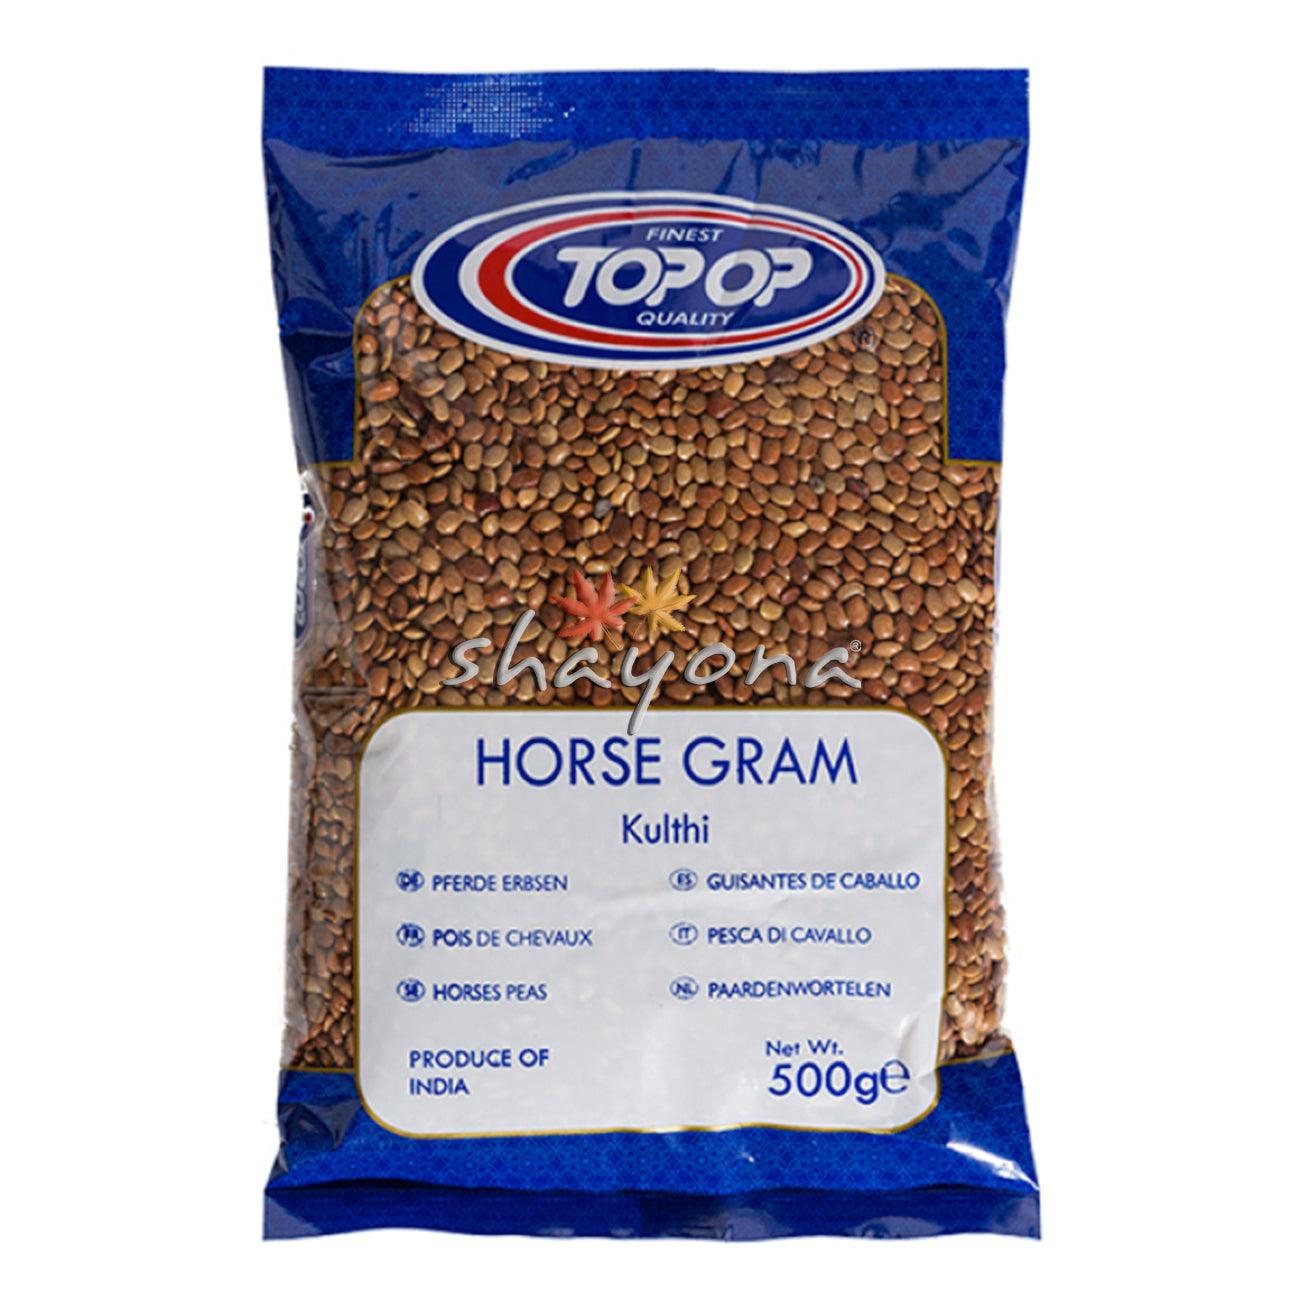 TopOp Horse Gram - Shayona UK